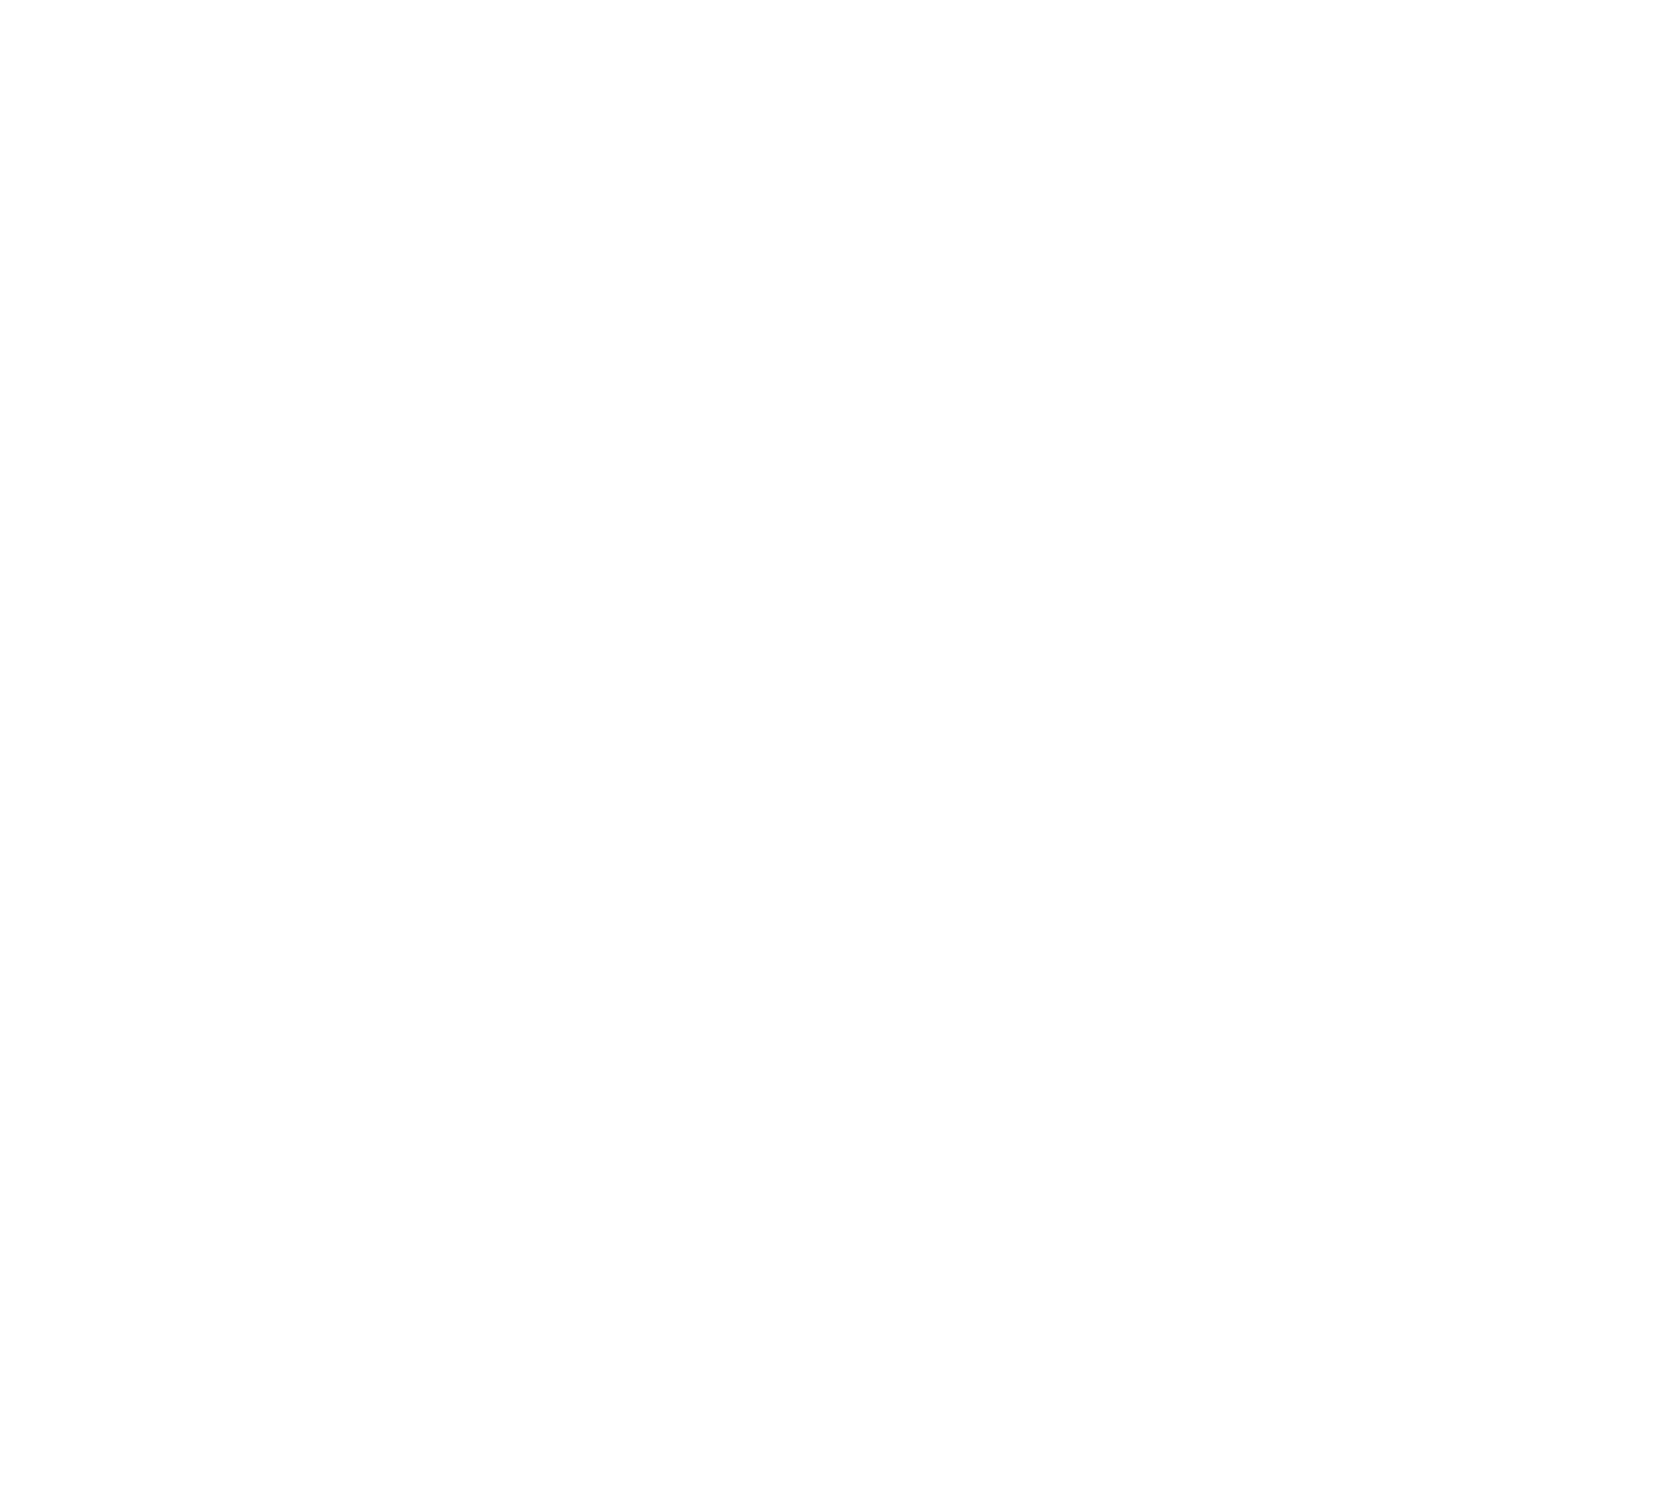 INVISIBLE COMPASS